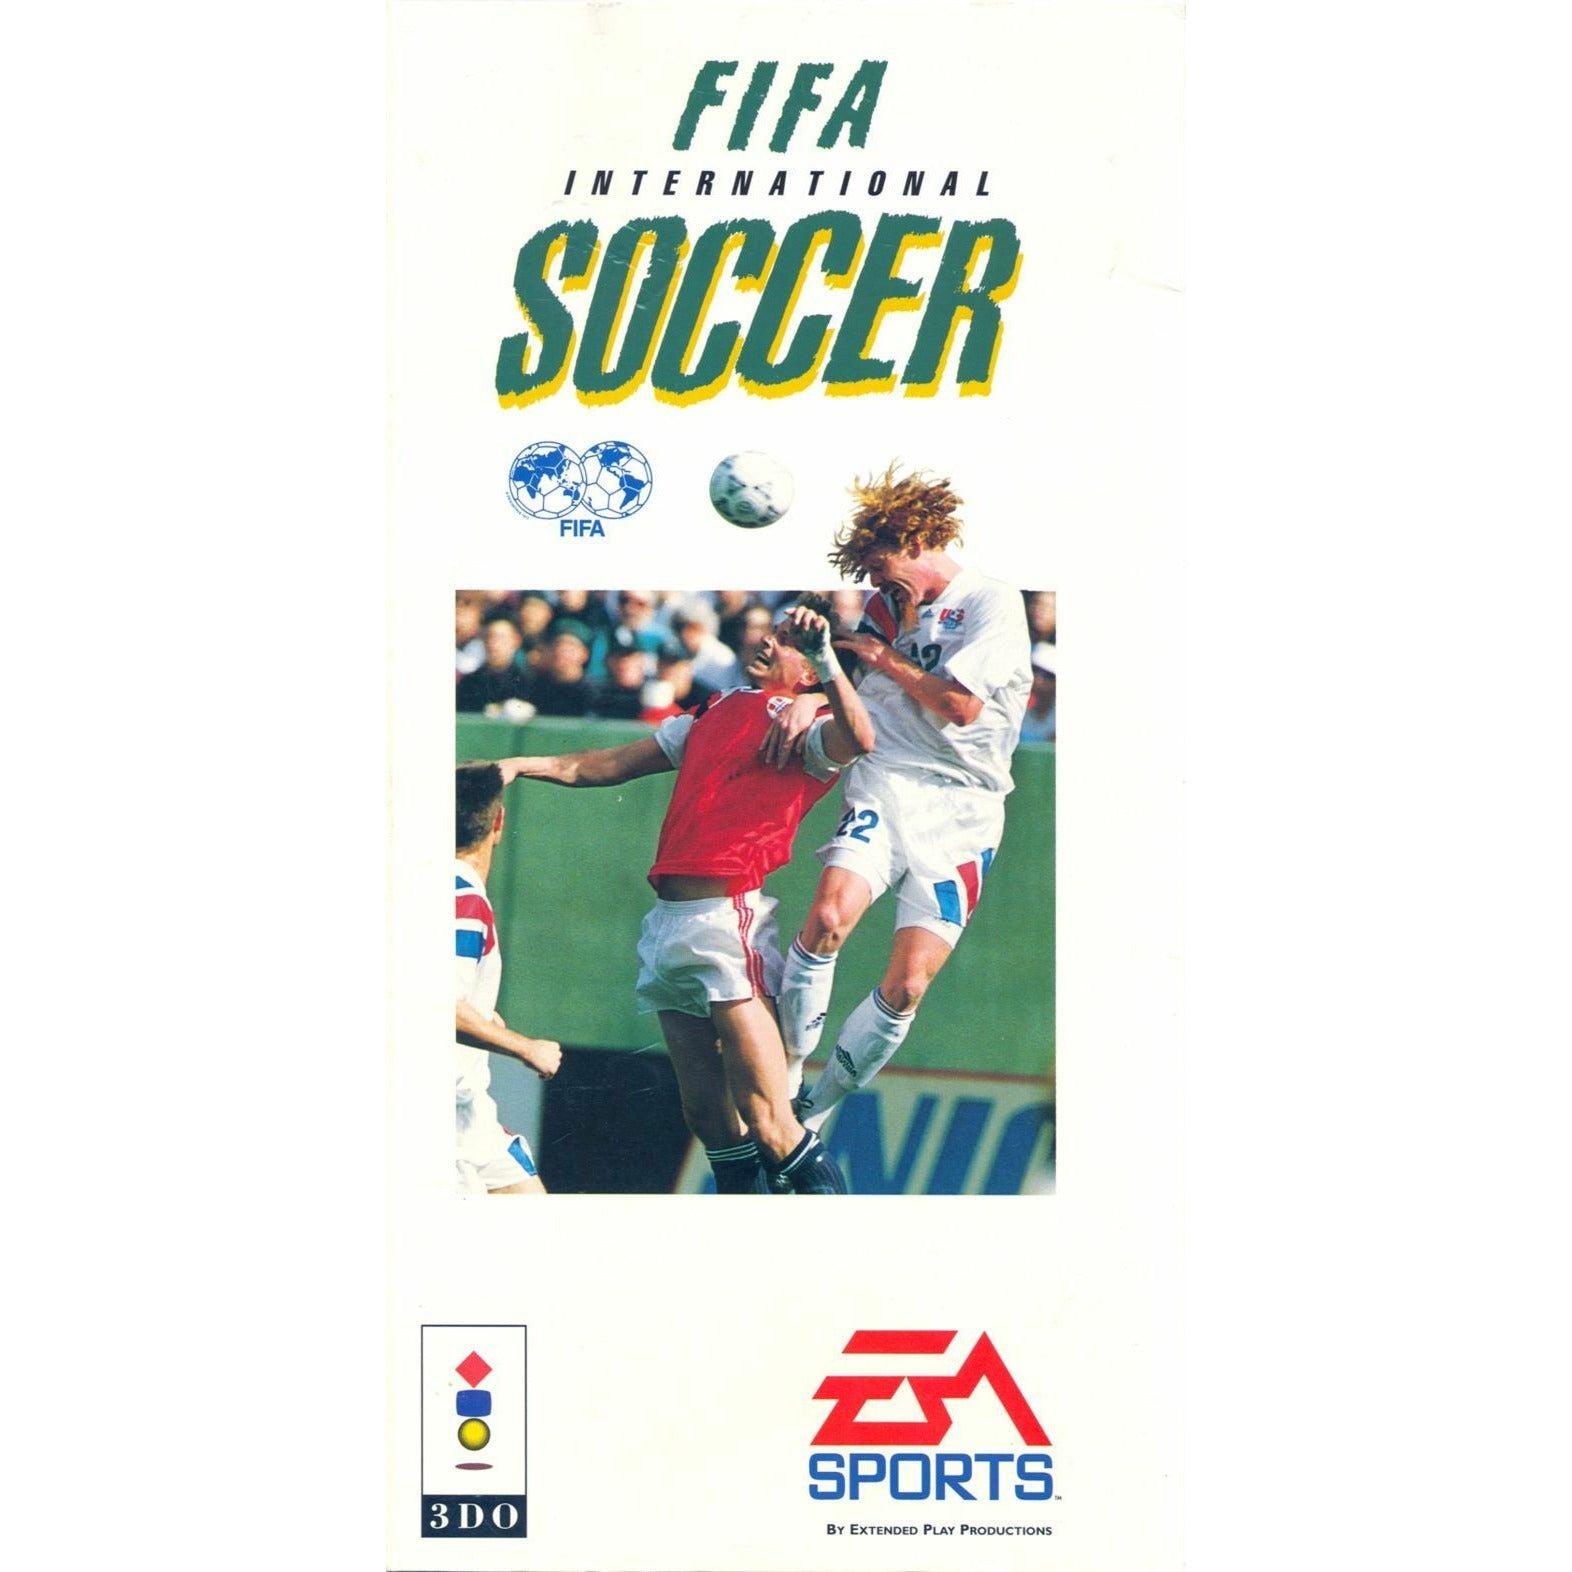 3DO - FIFA International Soccer